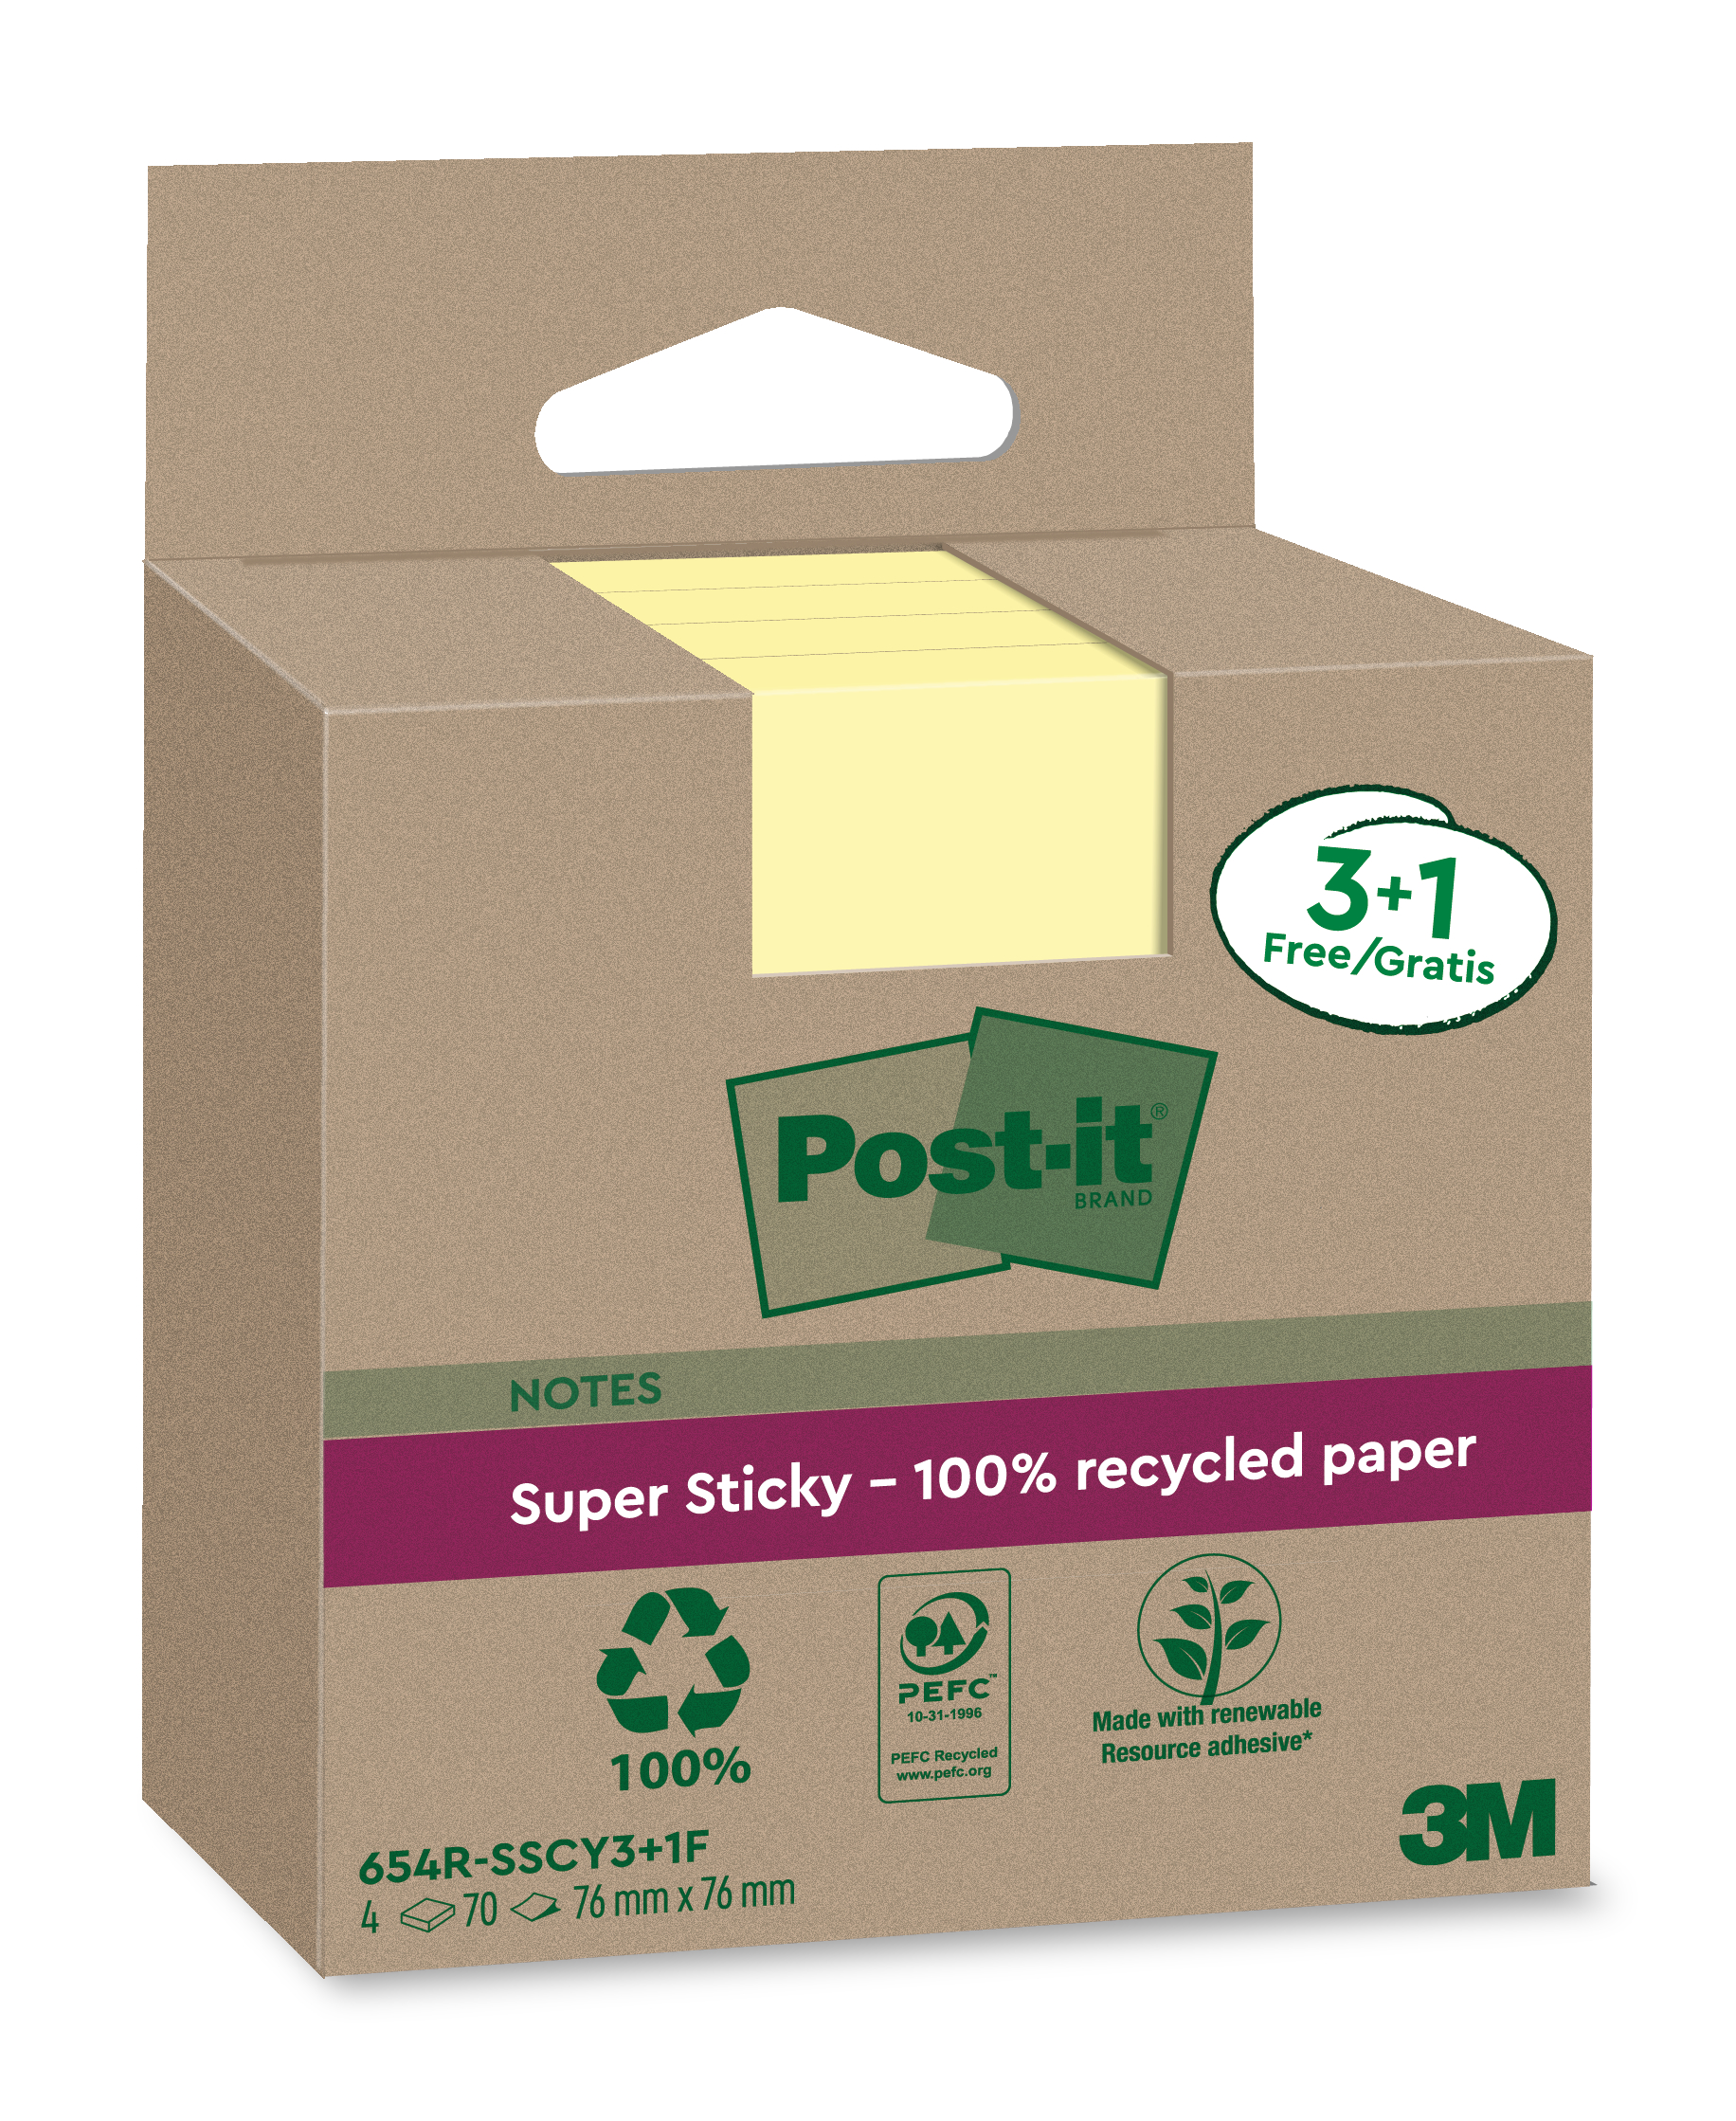 POST-IT SuperSticky Notes 76x76mm 654 RSSCY 3+1F Recycling,jaune 4x70 flls.